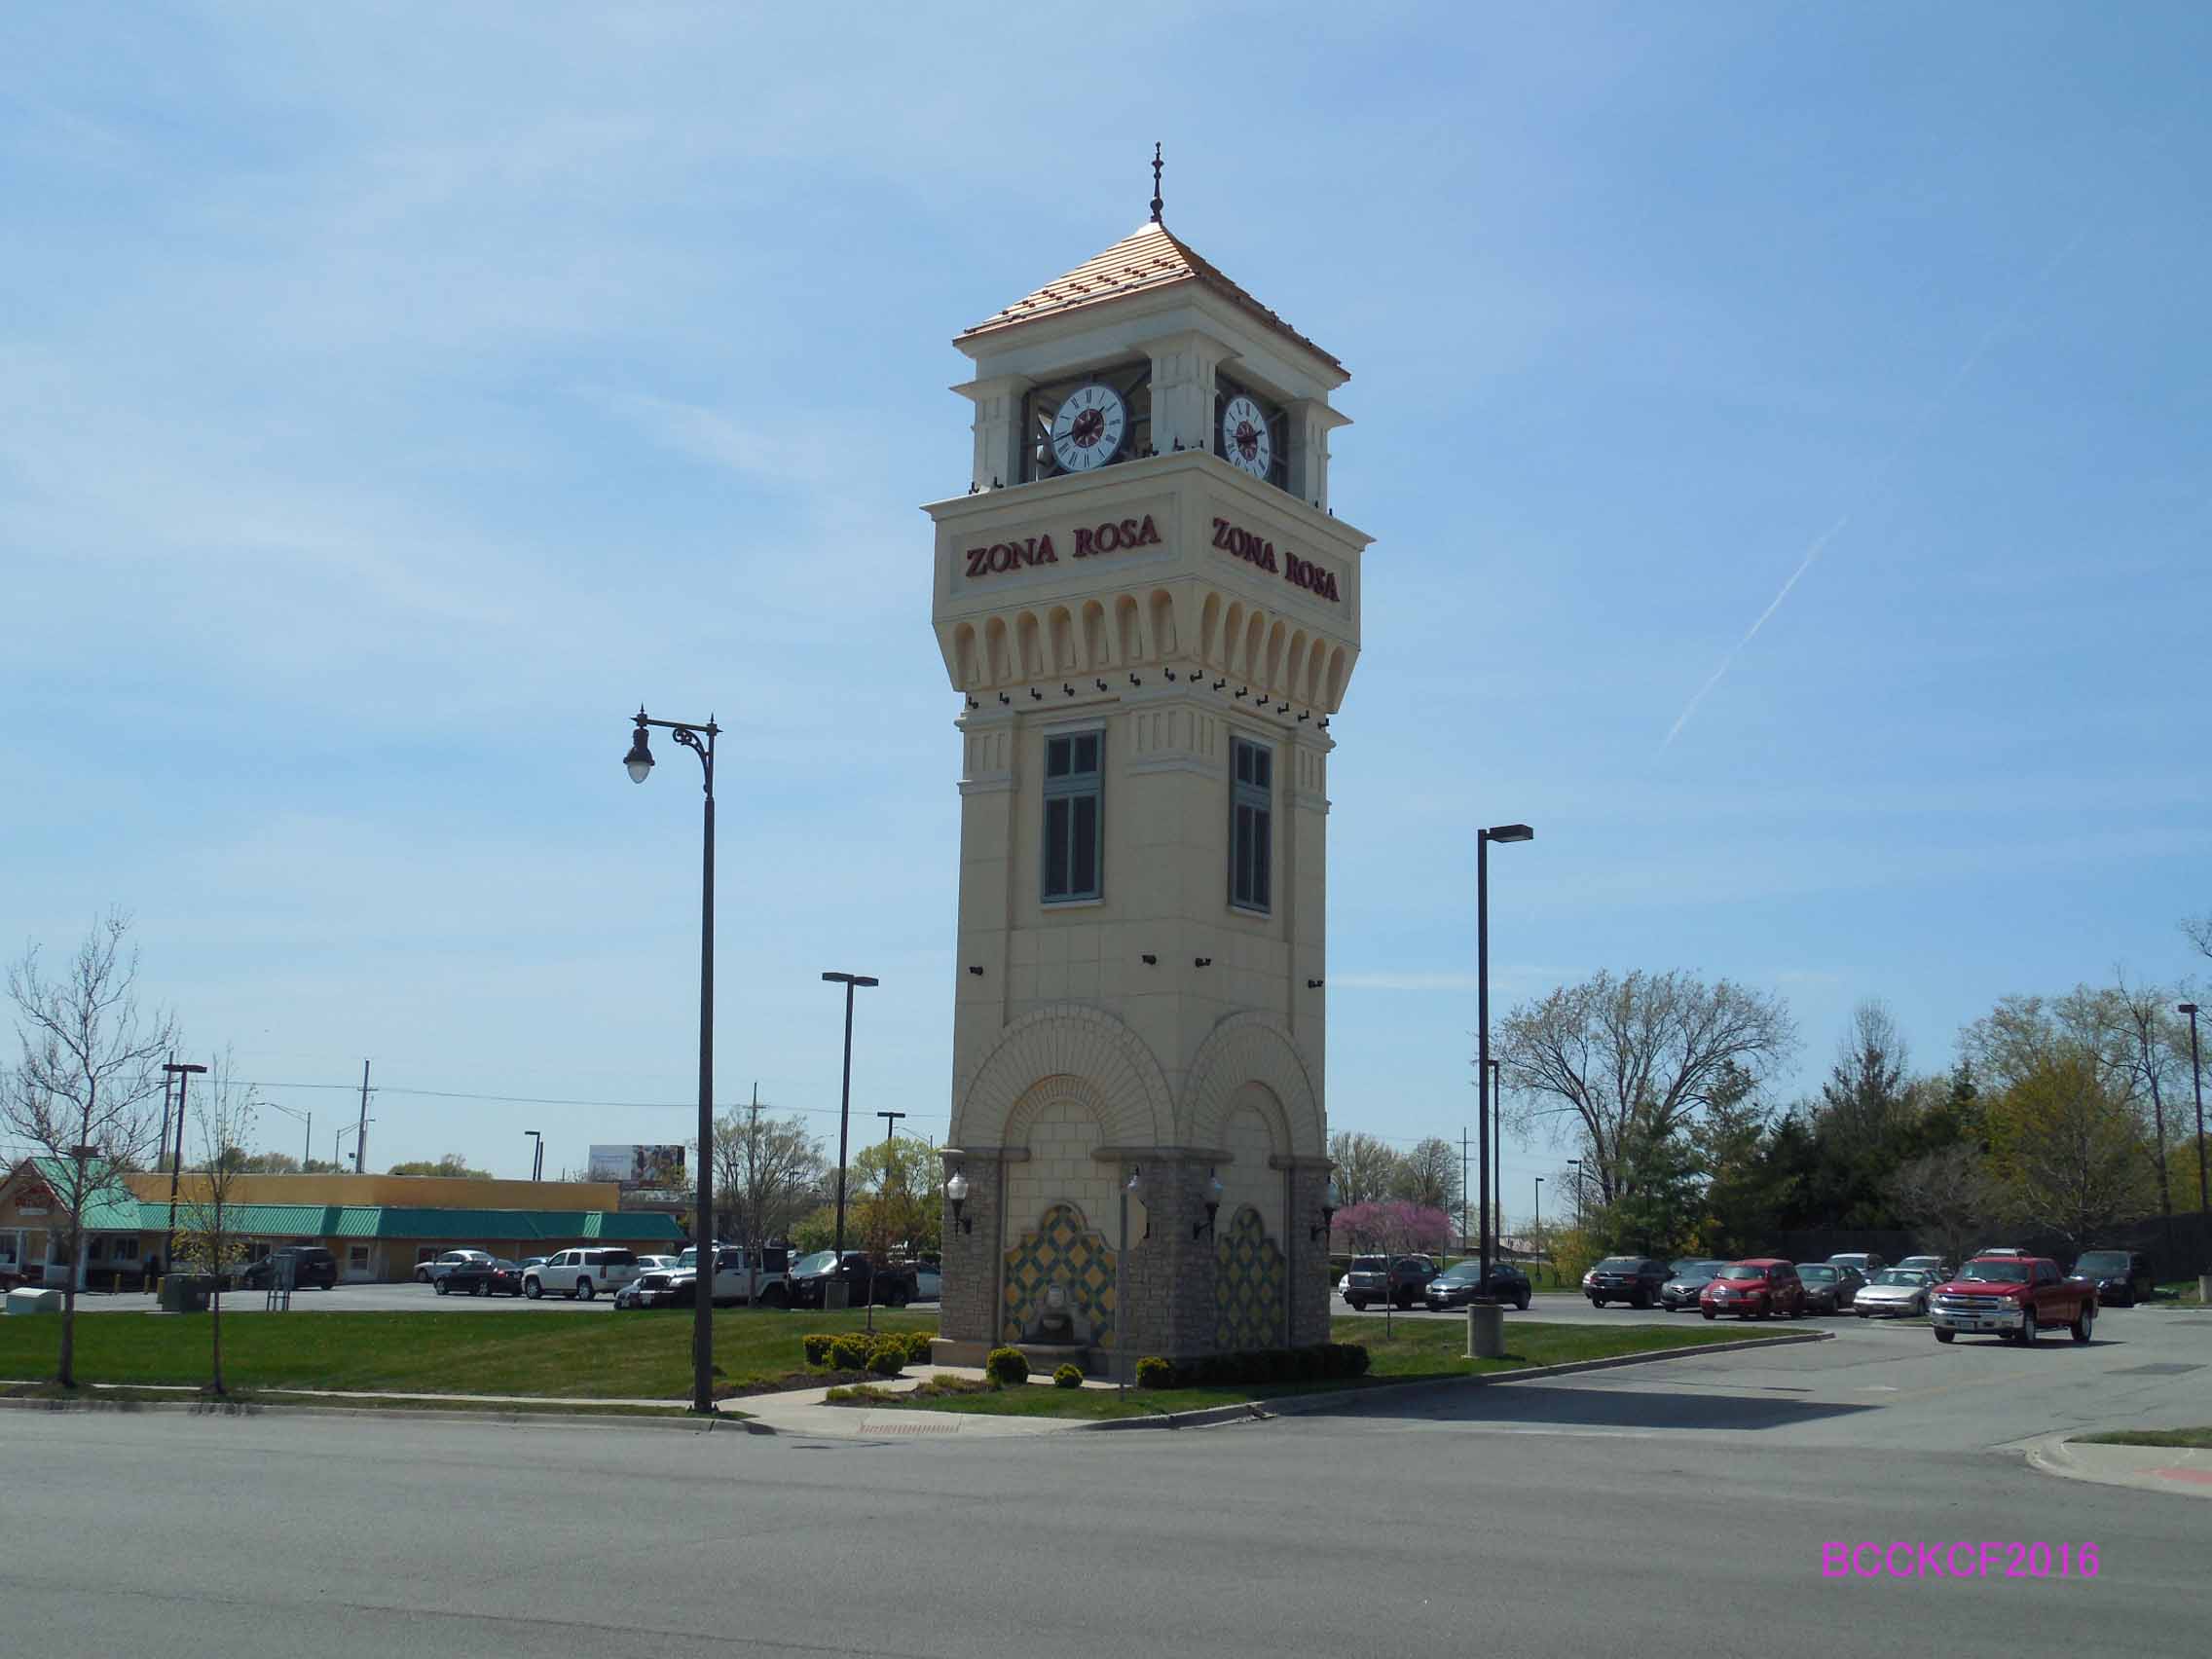 Zona Rosa Clock Tower Fountain | Hunting Fountains in Kansas City